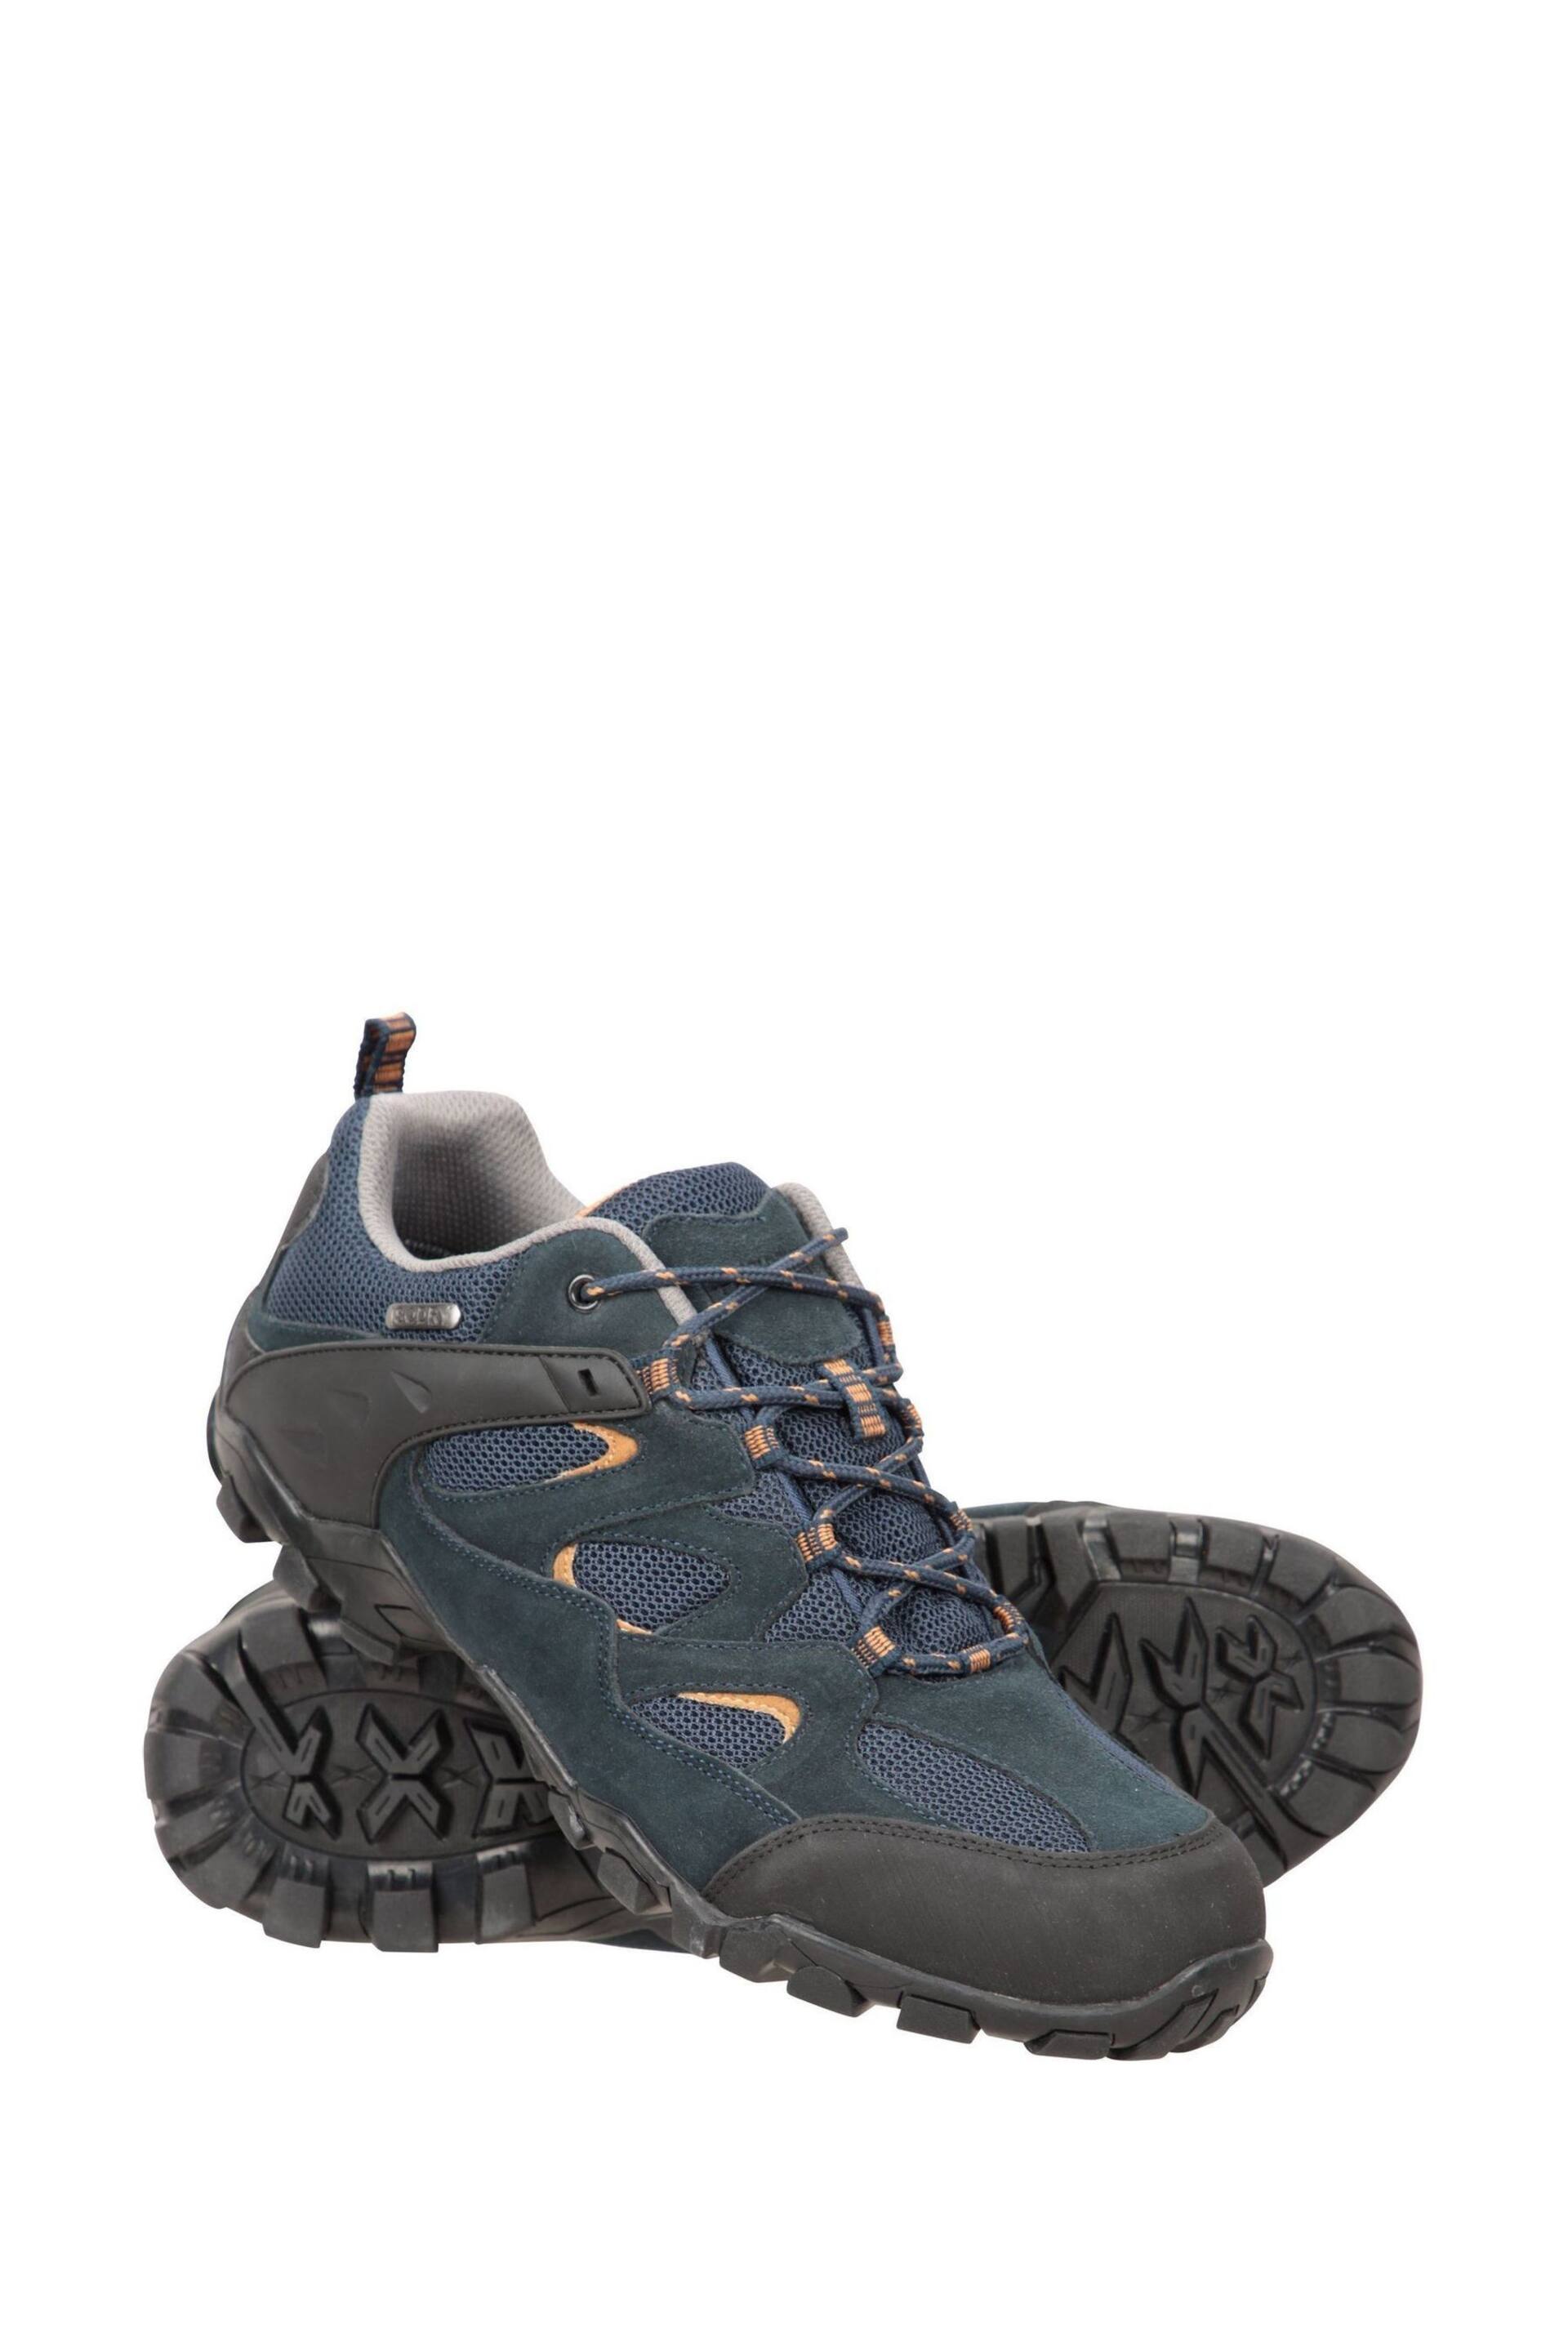 Mountain Warehouse Blue Mens Curlews Waterproof Walking Shoes - Image 1 of 5